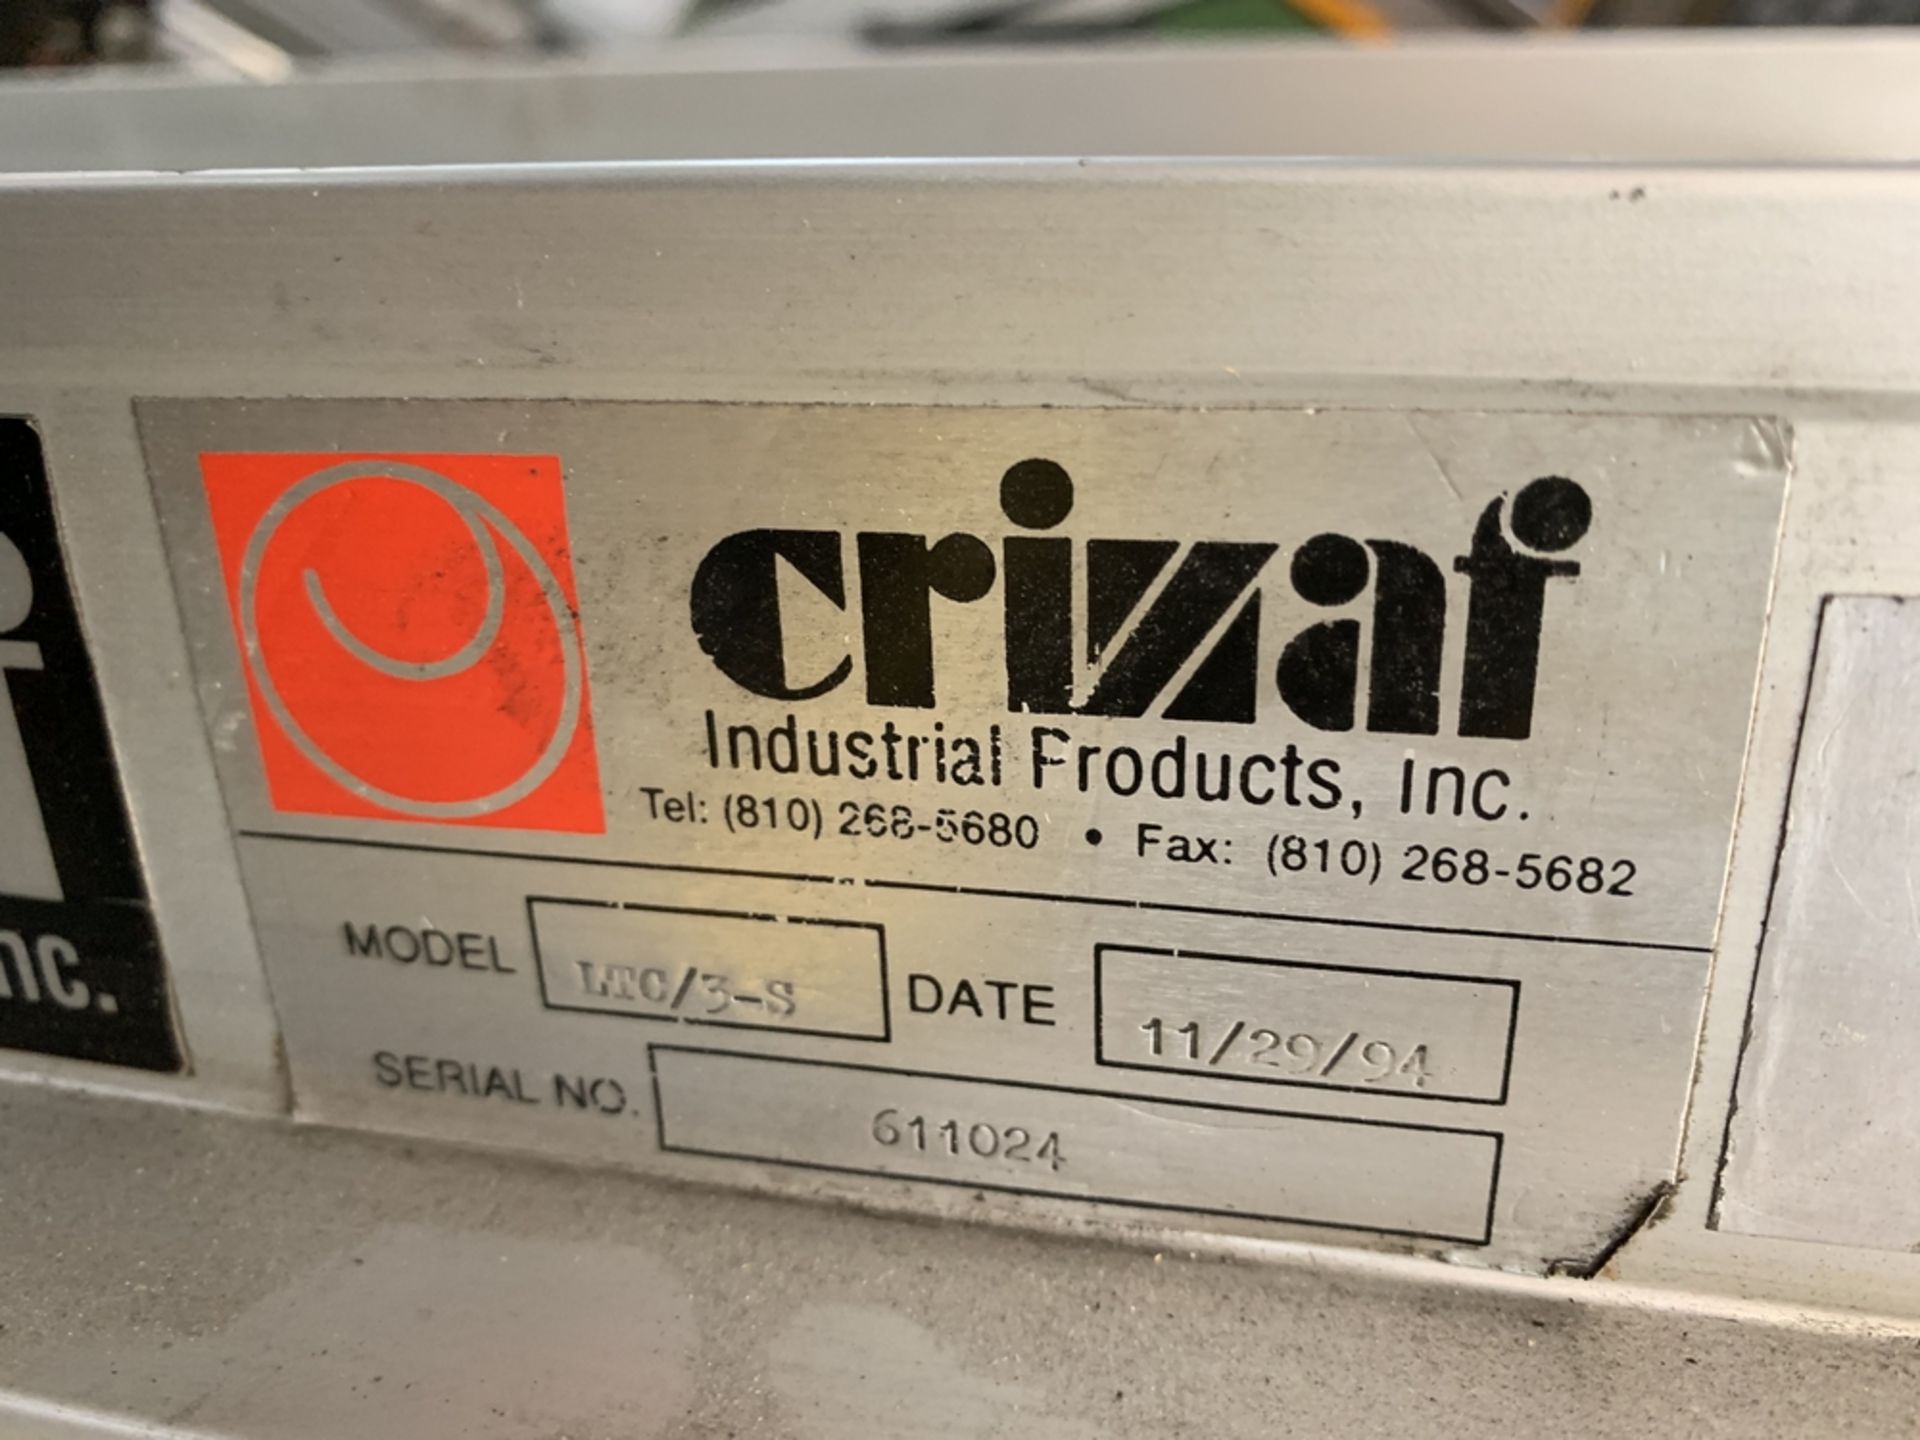 CRIZAF LTC/3-S Belt Conveyor, s/n 611024 BLDG #1 - Image 2 of 2